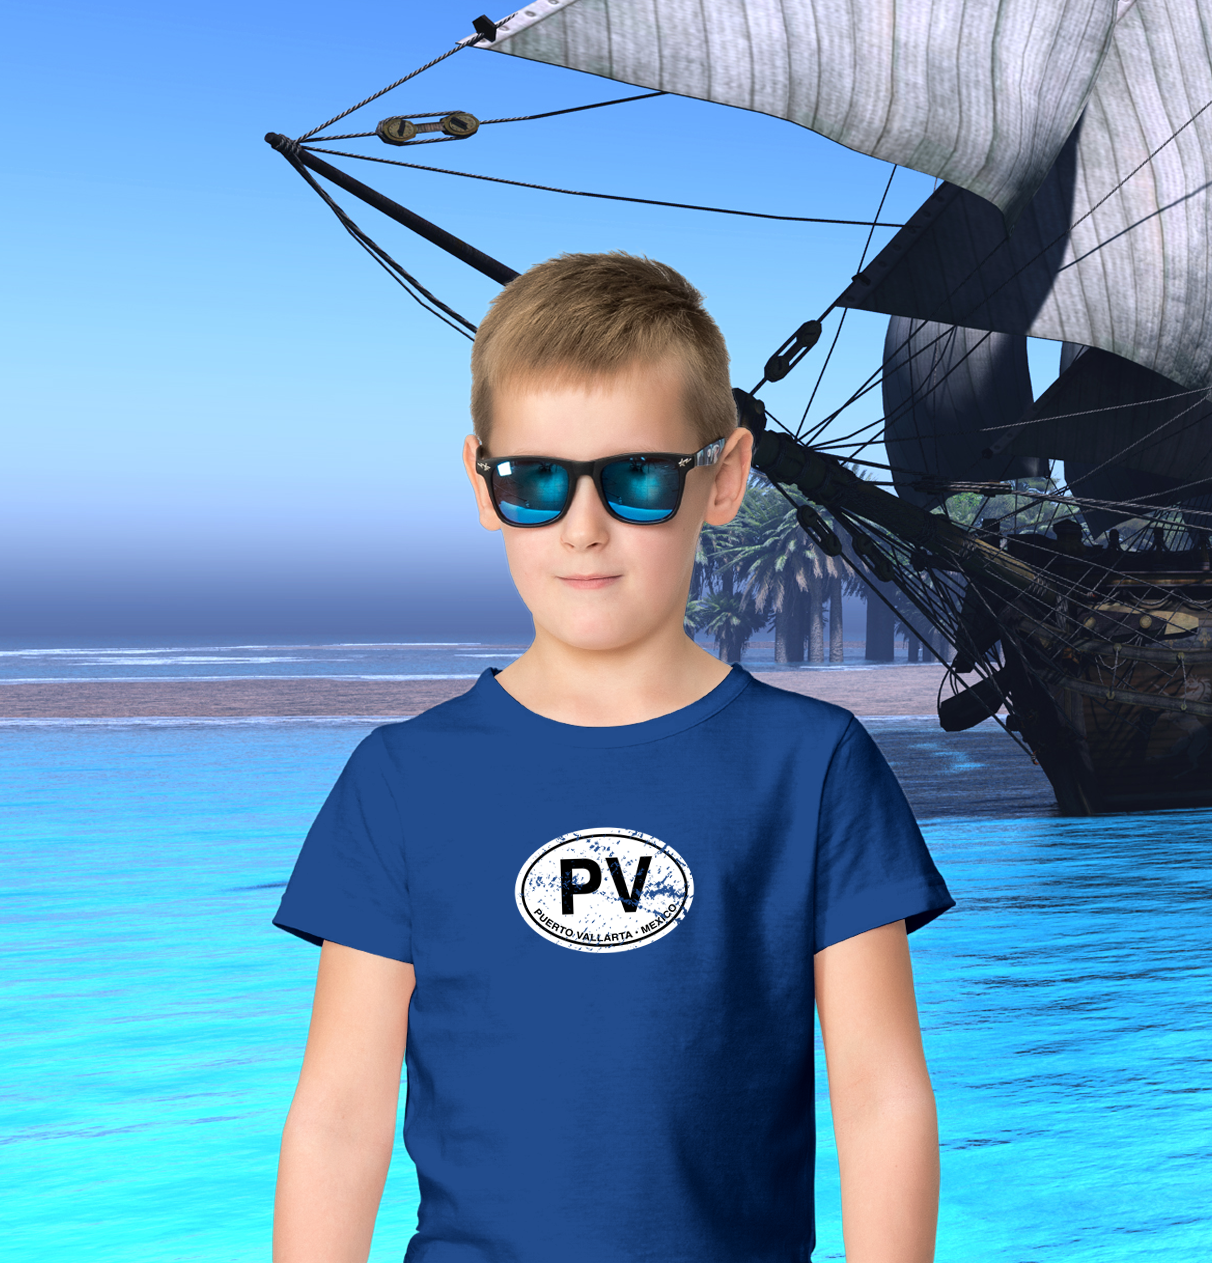 Puerto Vallarta Classic Youth T-Shirt - My Destination Location